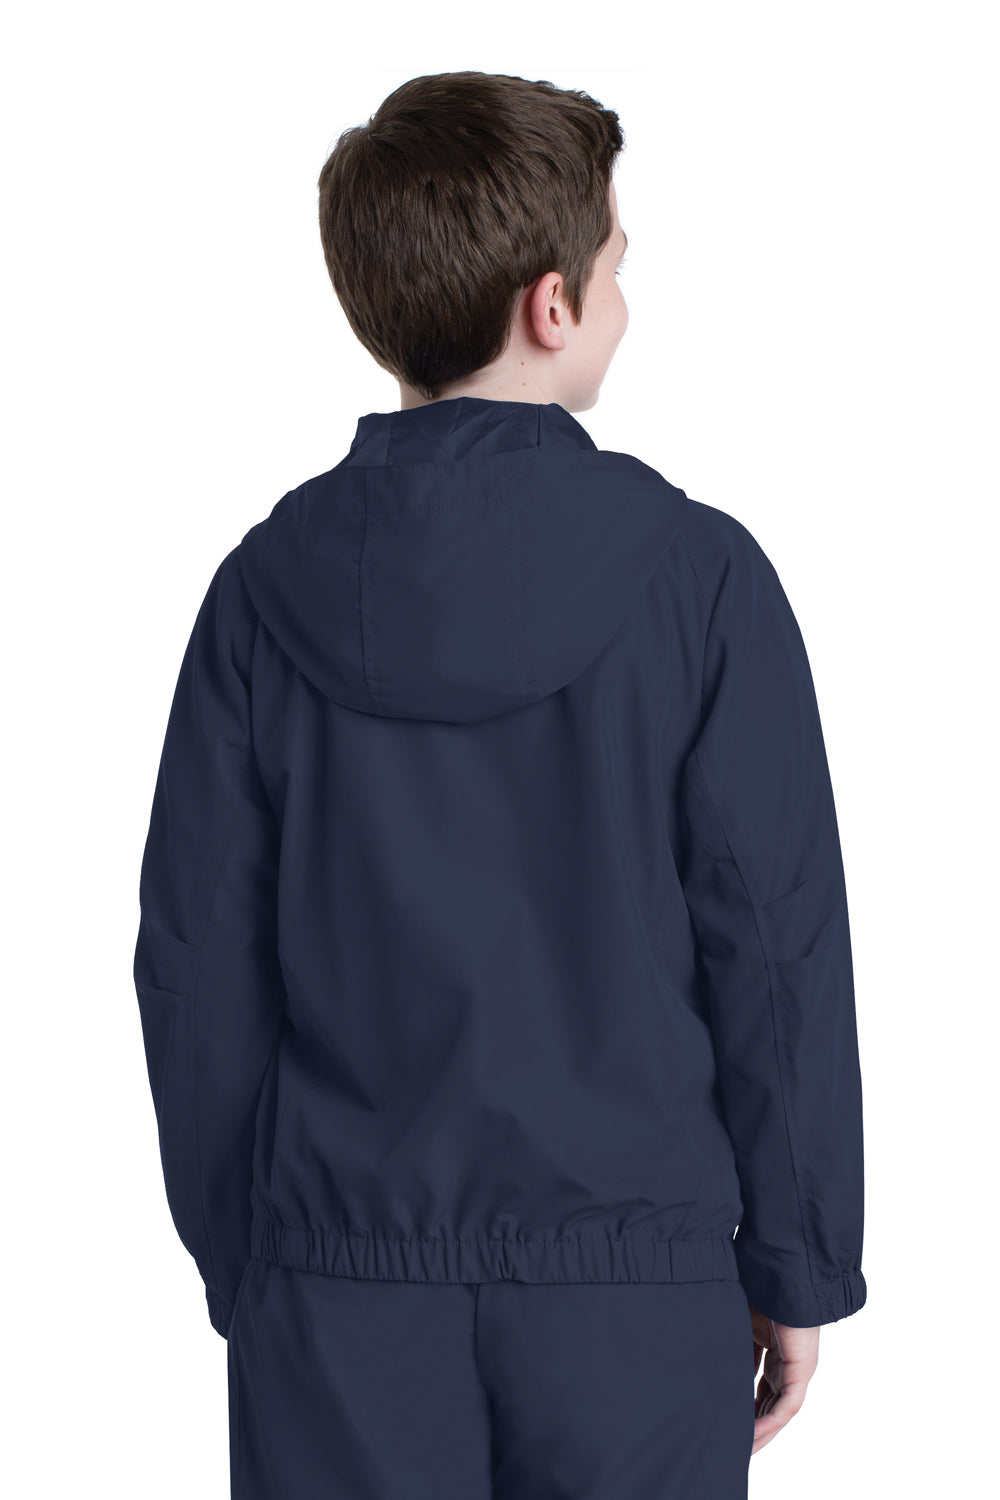 Sport-Tek YST73 Youth Water Resistant Full Zip Hooded Jacket Navy Blue Back